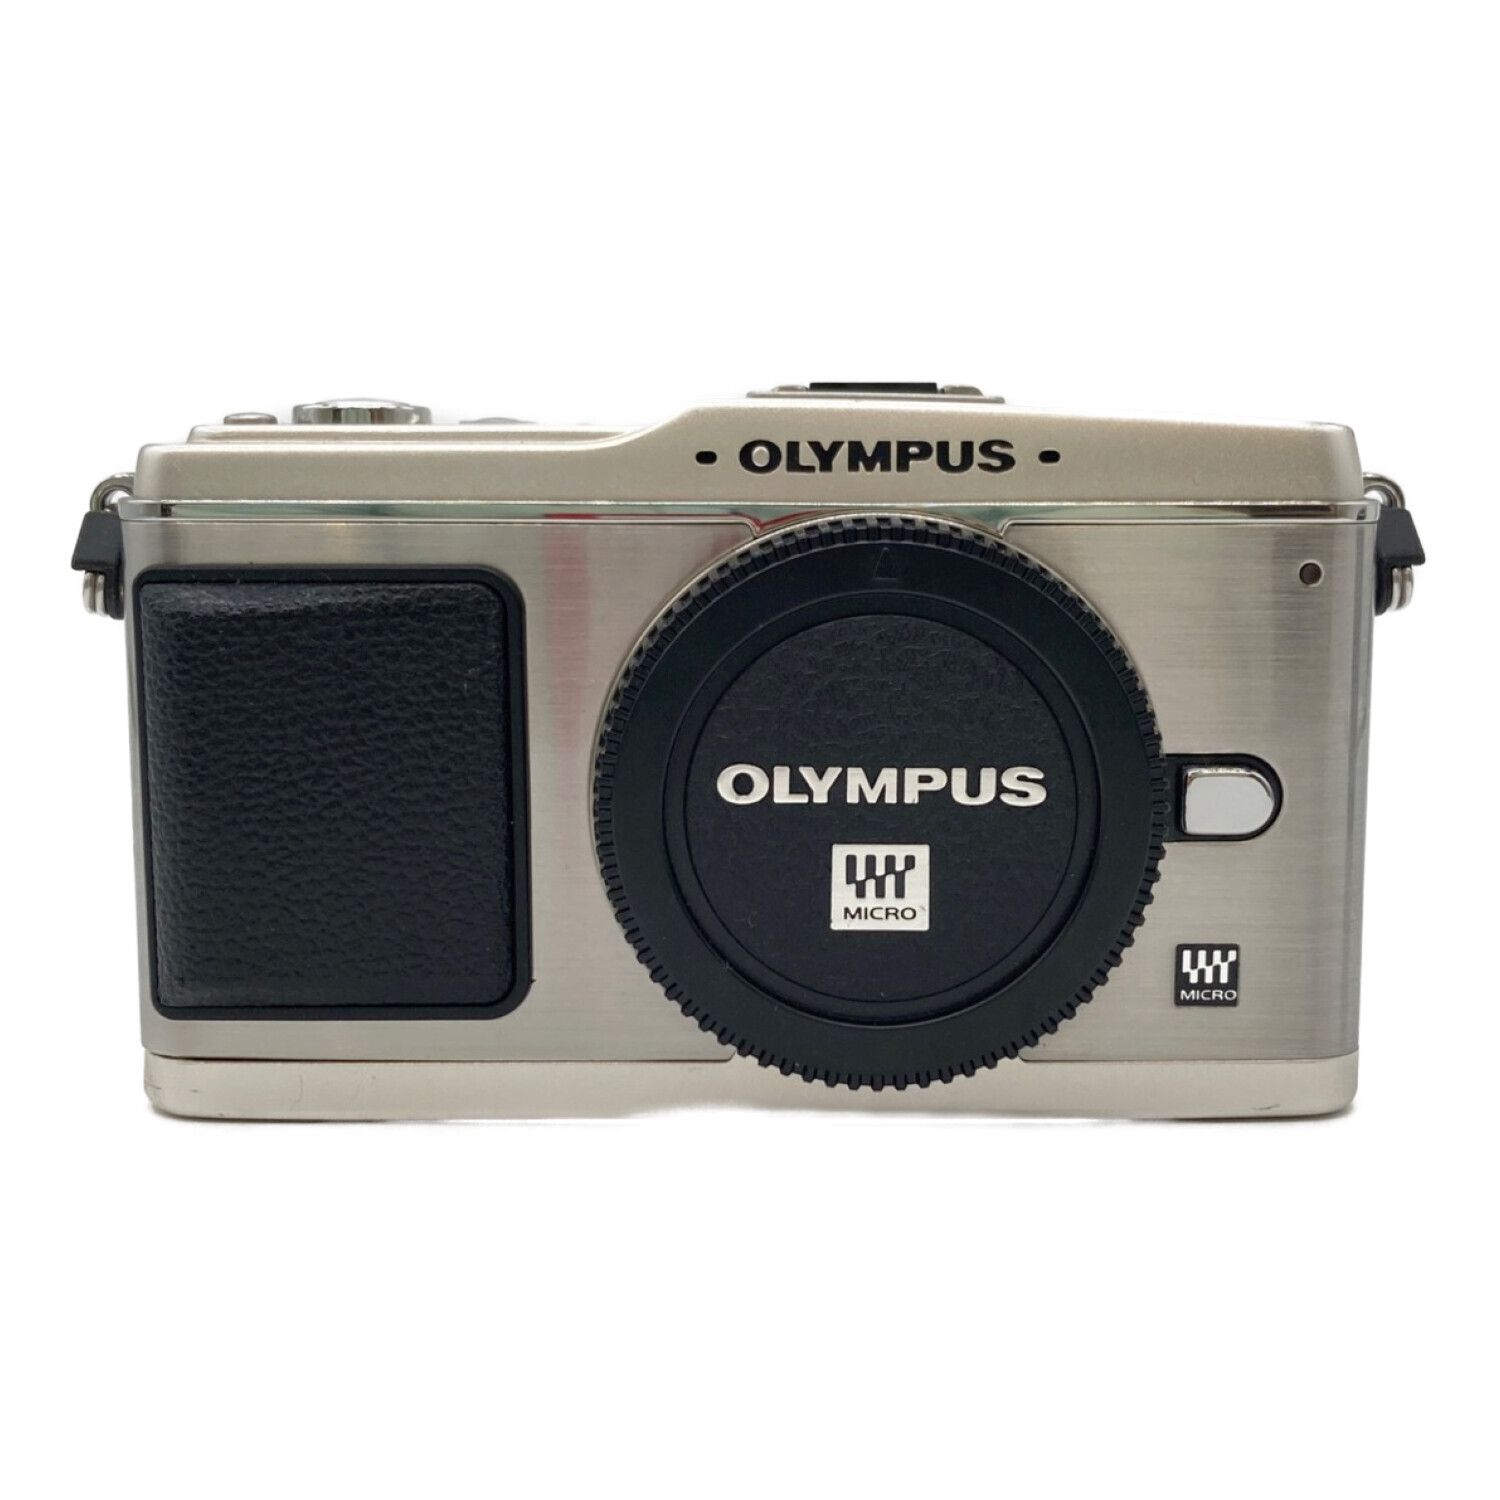 OLYMPUS (オリンパス) ミラーレス一眼レフカメラ E-P1 1310万画素 ...